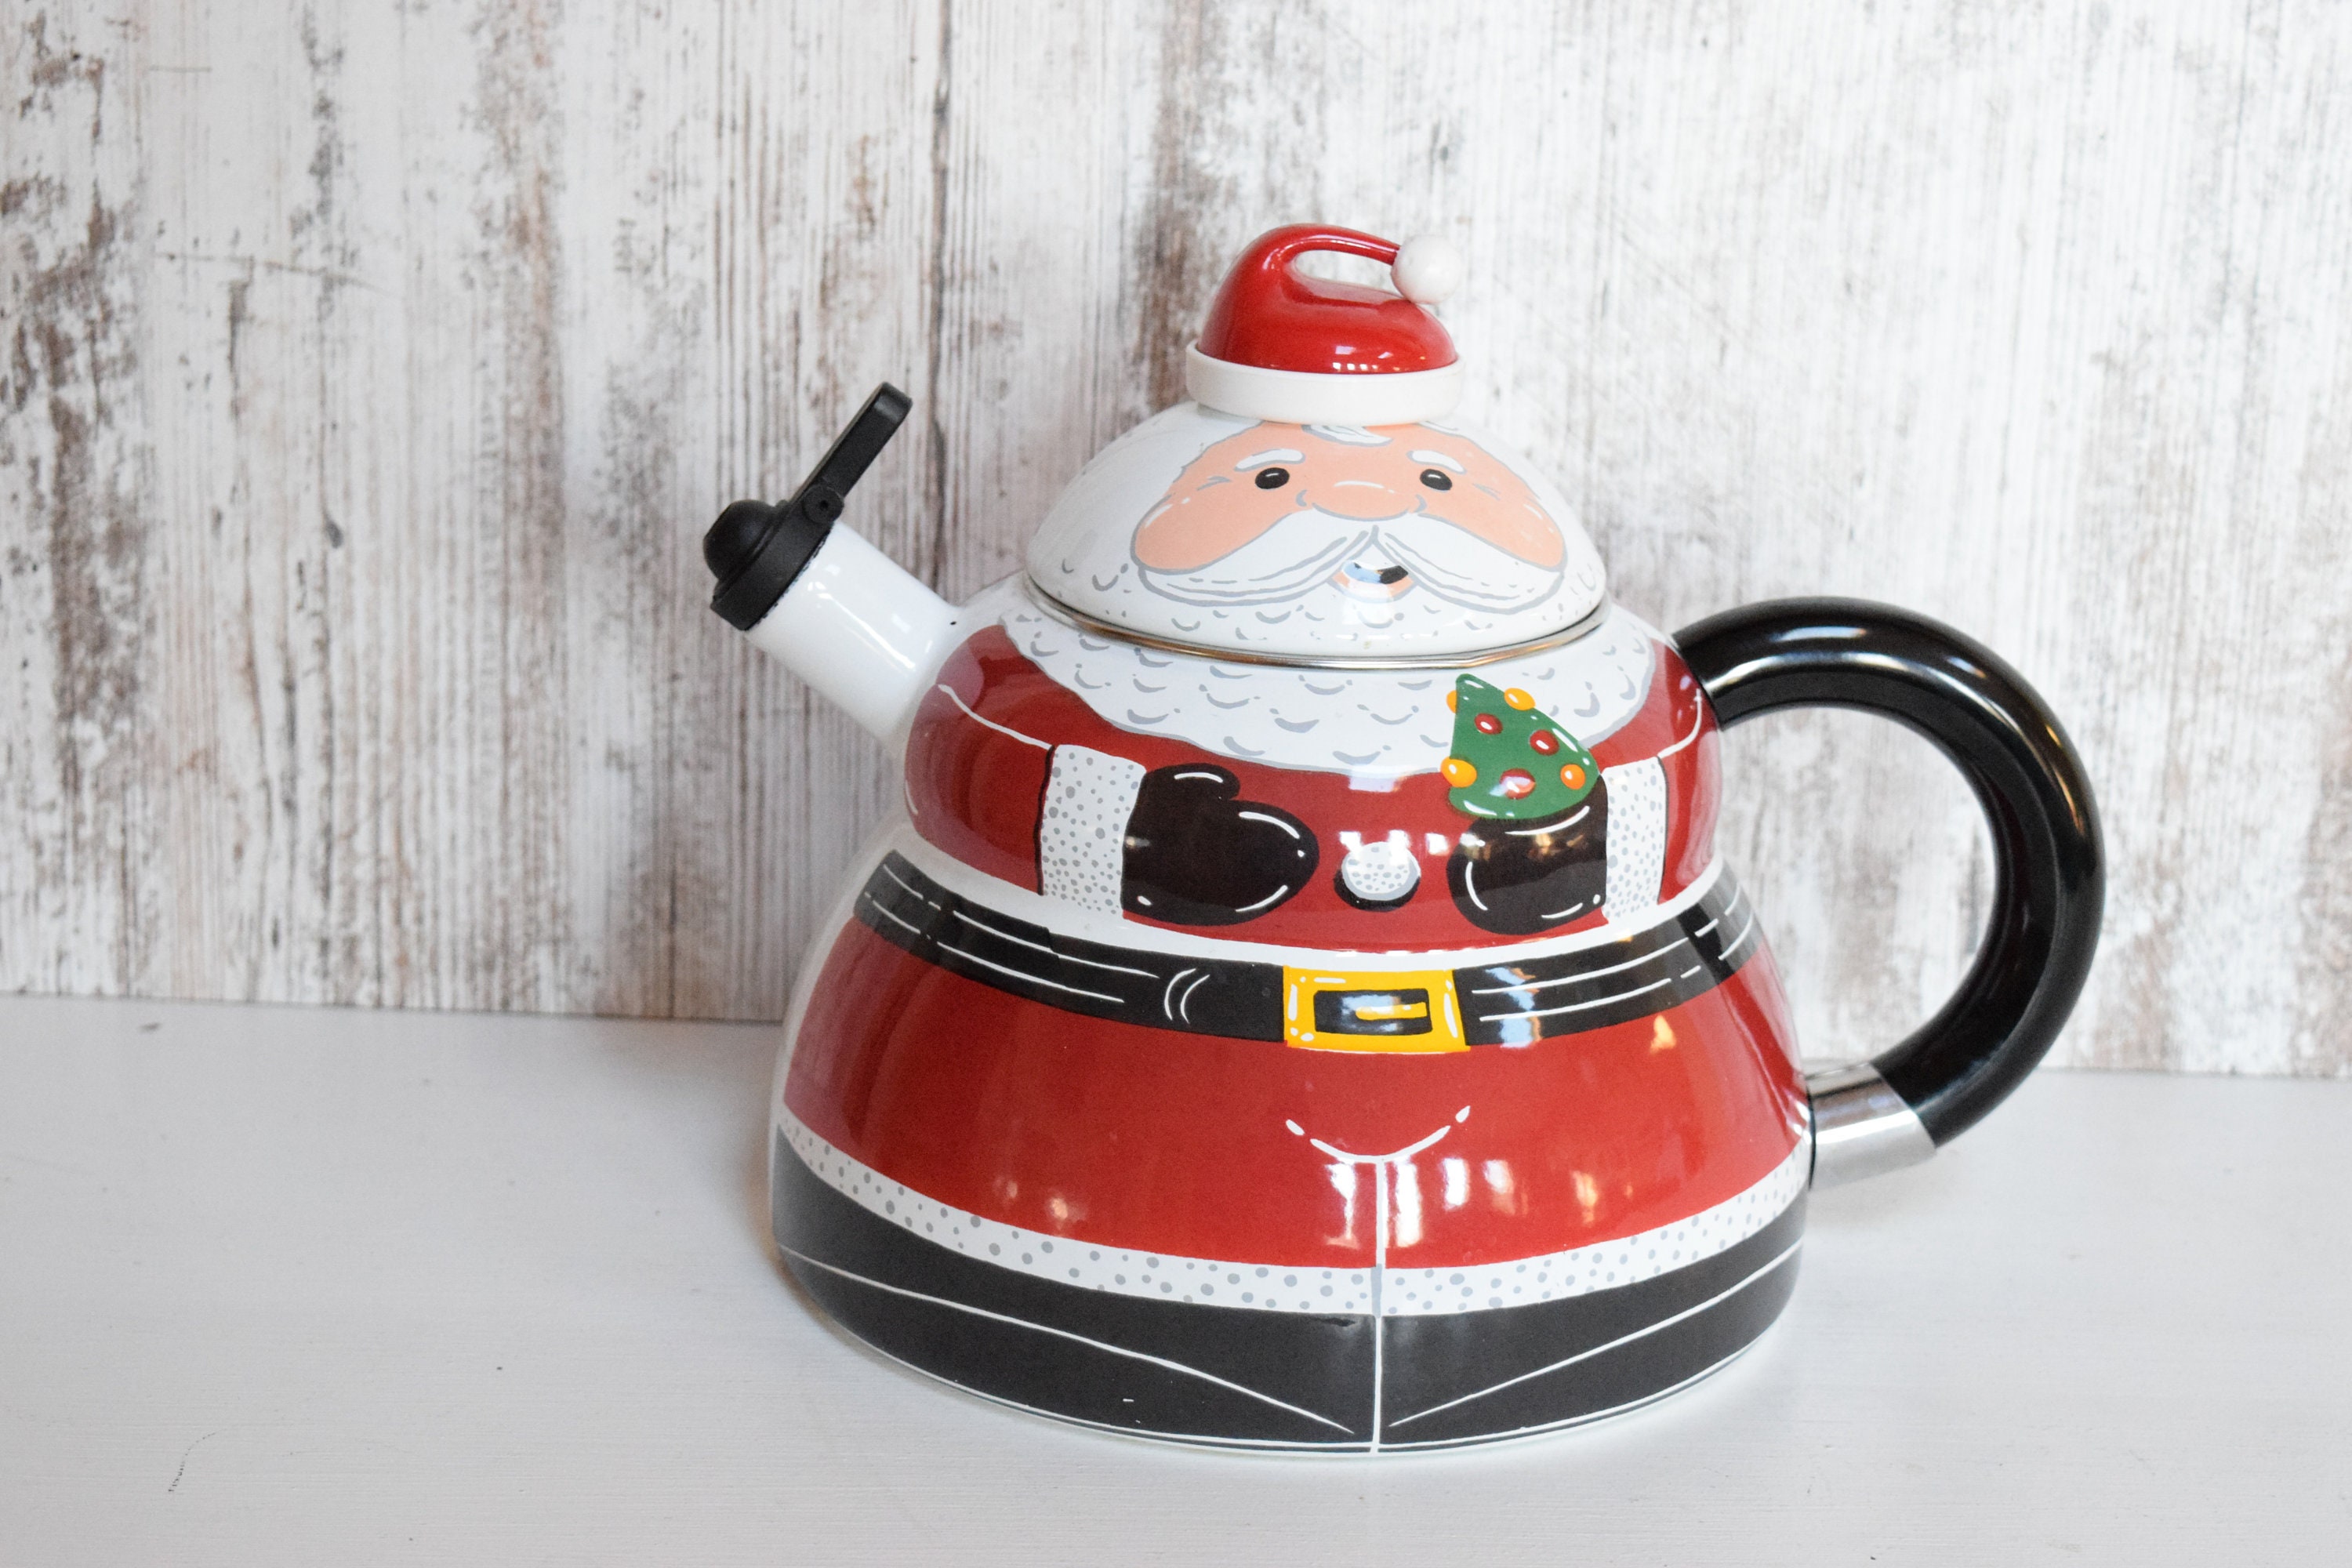 RORPOIR Enamel Kettle Enameled Teapot Christmas Teapot Insulated Teapot  Gooseneck Tea Kettle Ceramic Teapot Retro Enamel Teakettle Tea Heating  Kettle